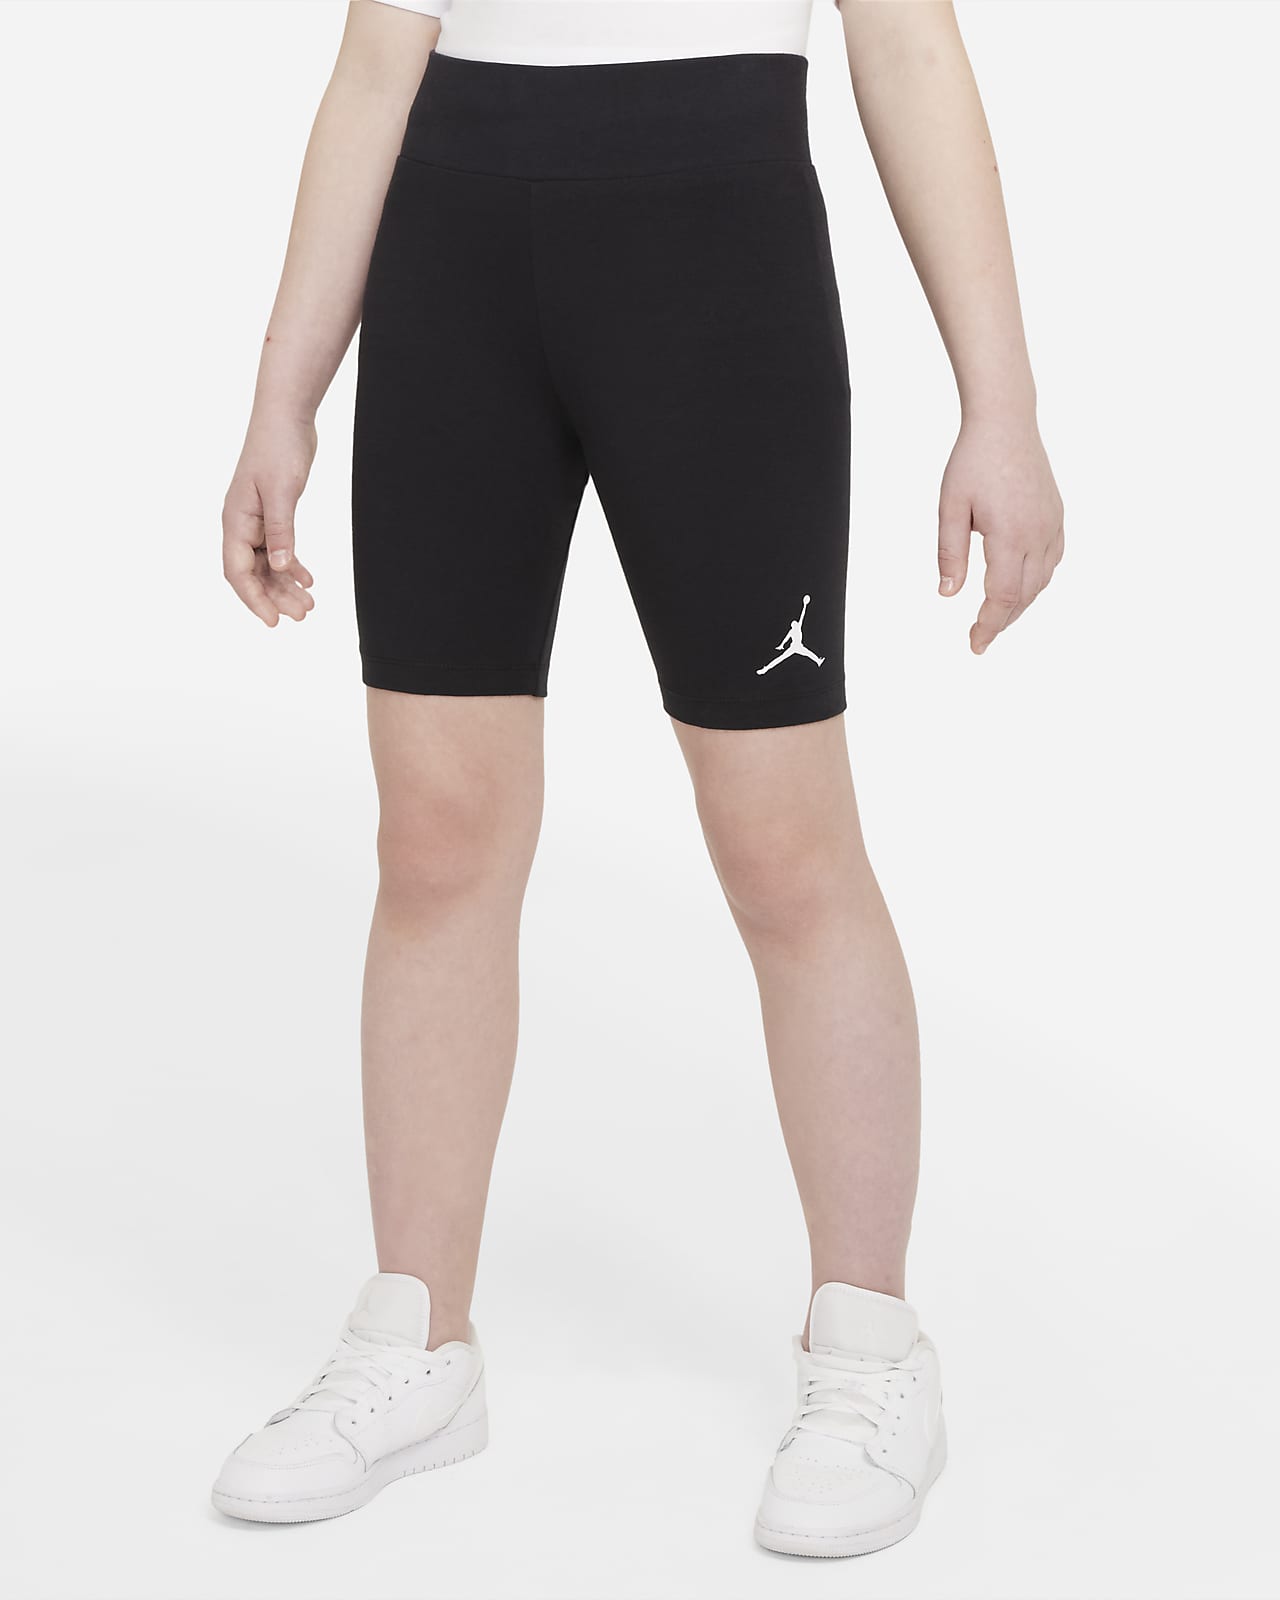 girls essential high rise bike shorts, girls bottoms